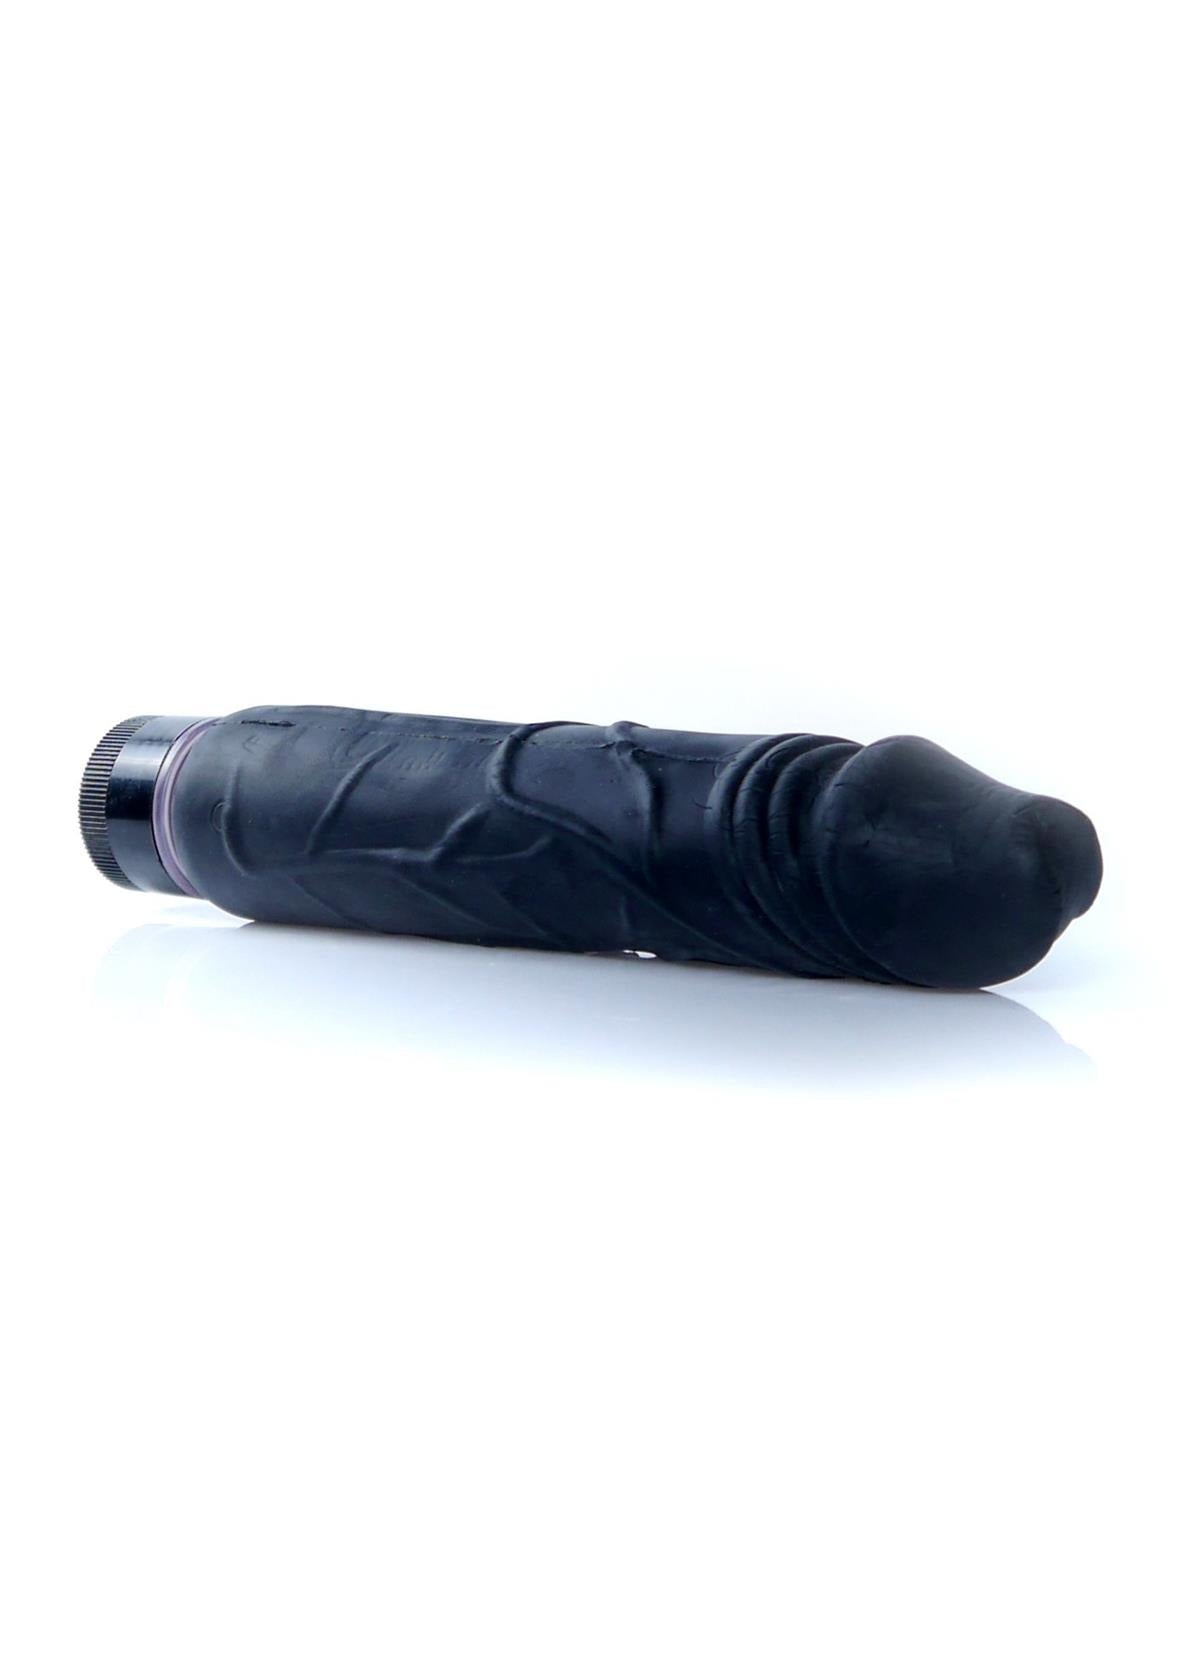 Bossoftoys - 67-00098 - Real Skin - Realistic vibrator - Black - 22 m- Dia 4 cm - Multispeed